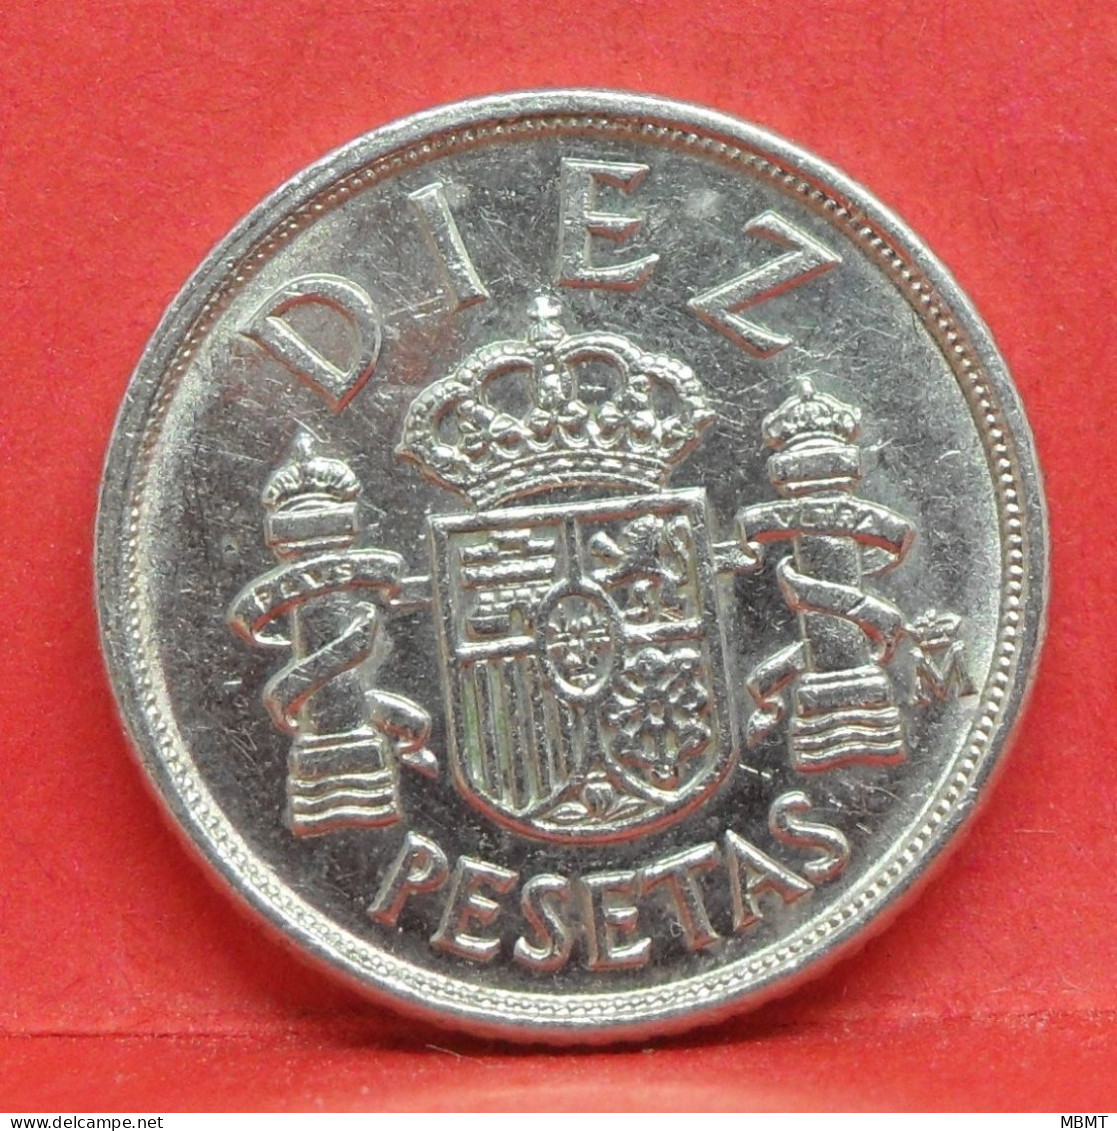 10 Pesetas 1983 - SUP - Pièce Monnaie Espagne - Article N°2420 - 10 Pesetas